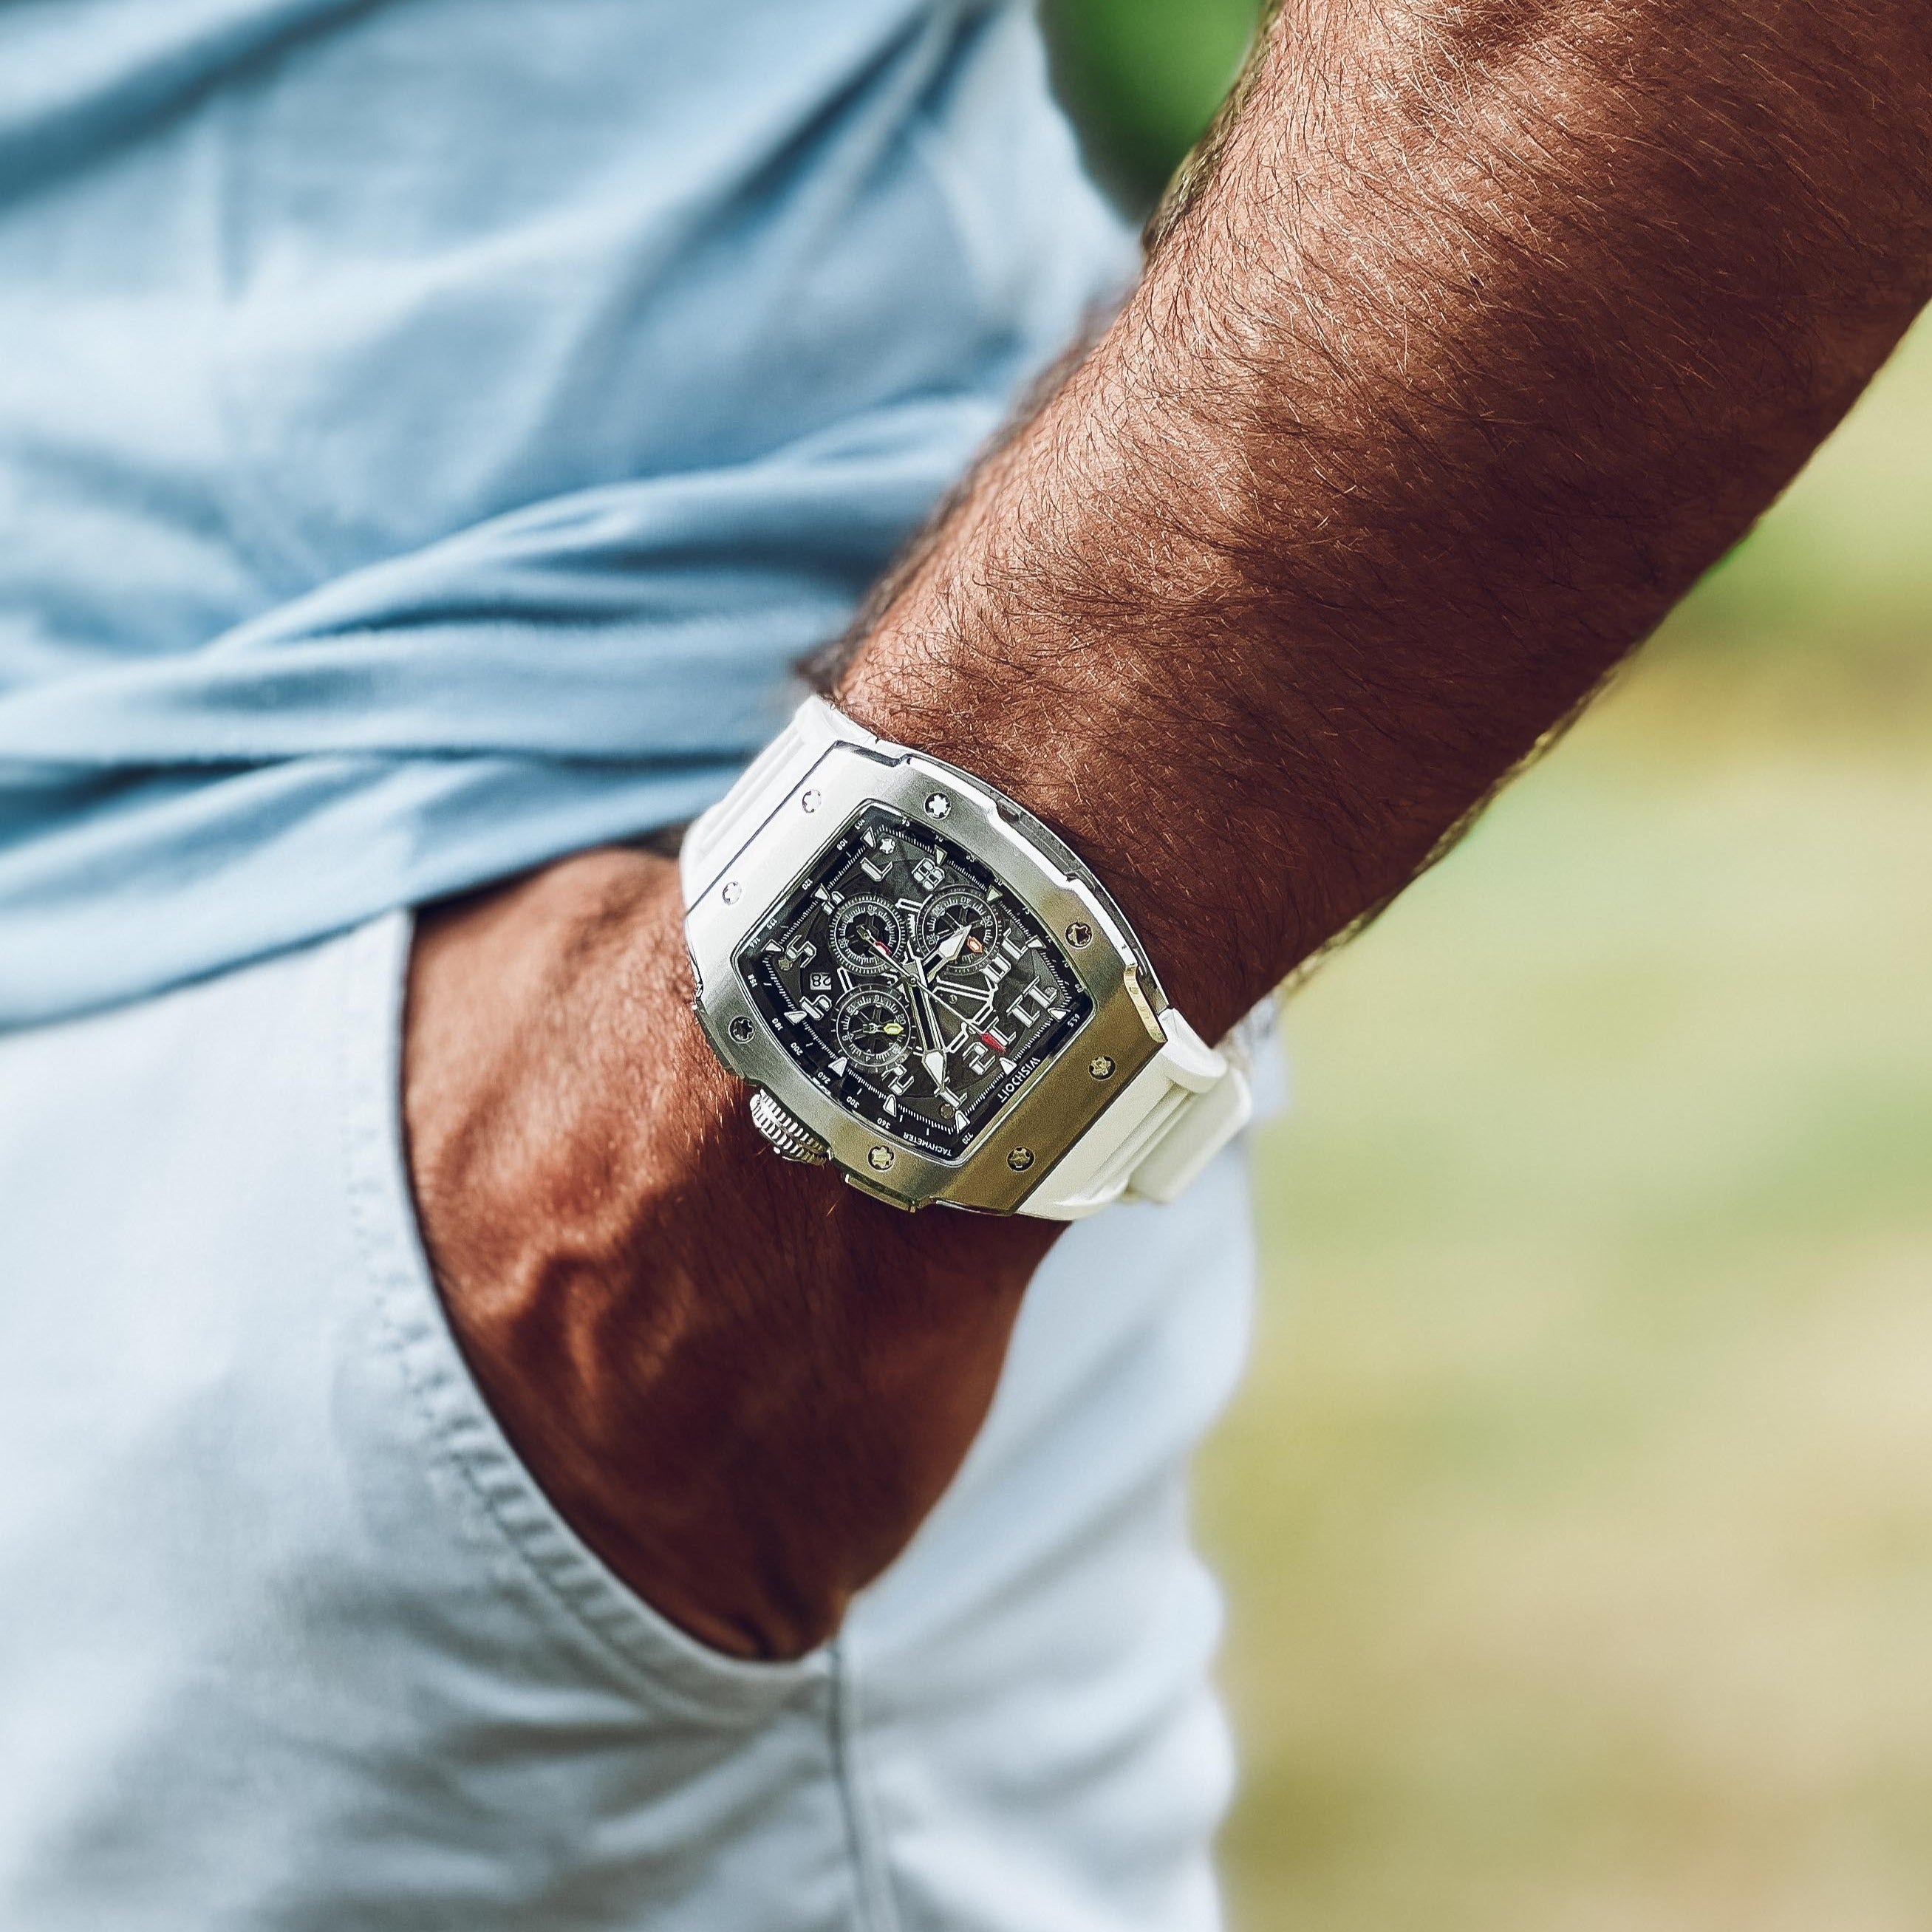 wishdoit racing GT chronograph watches silver white watch for men